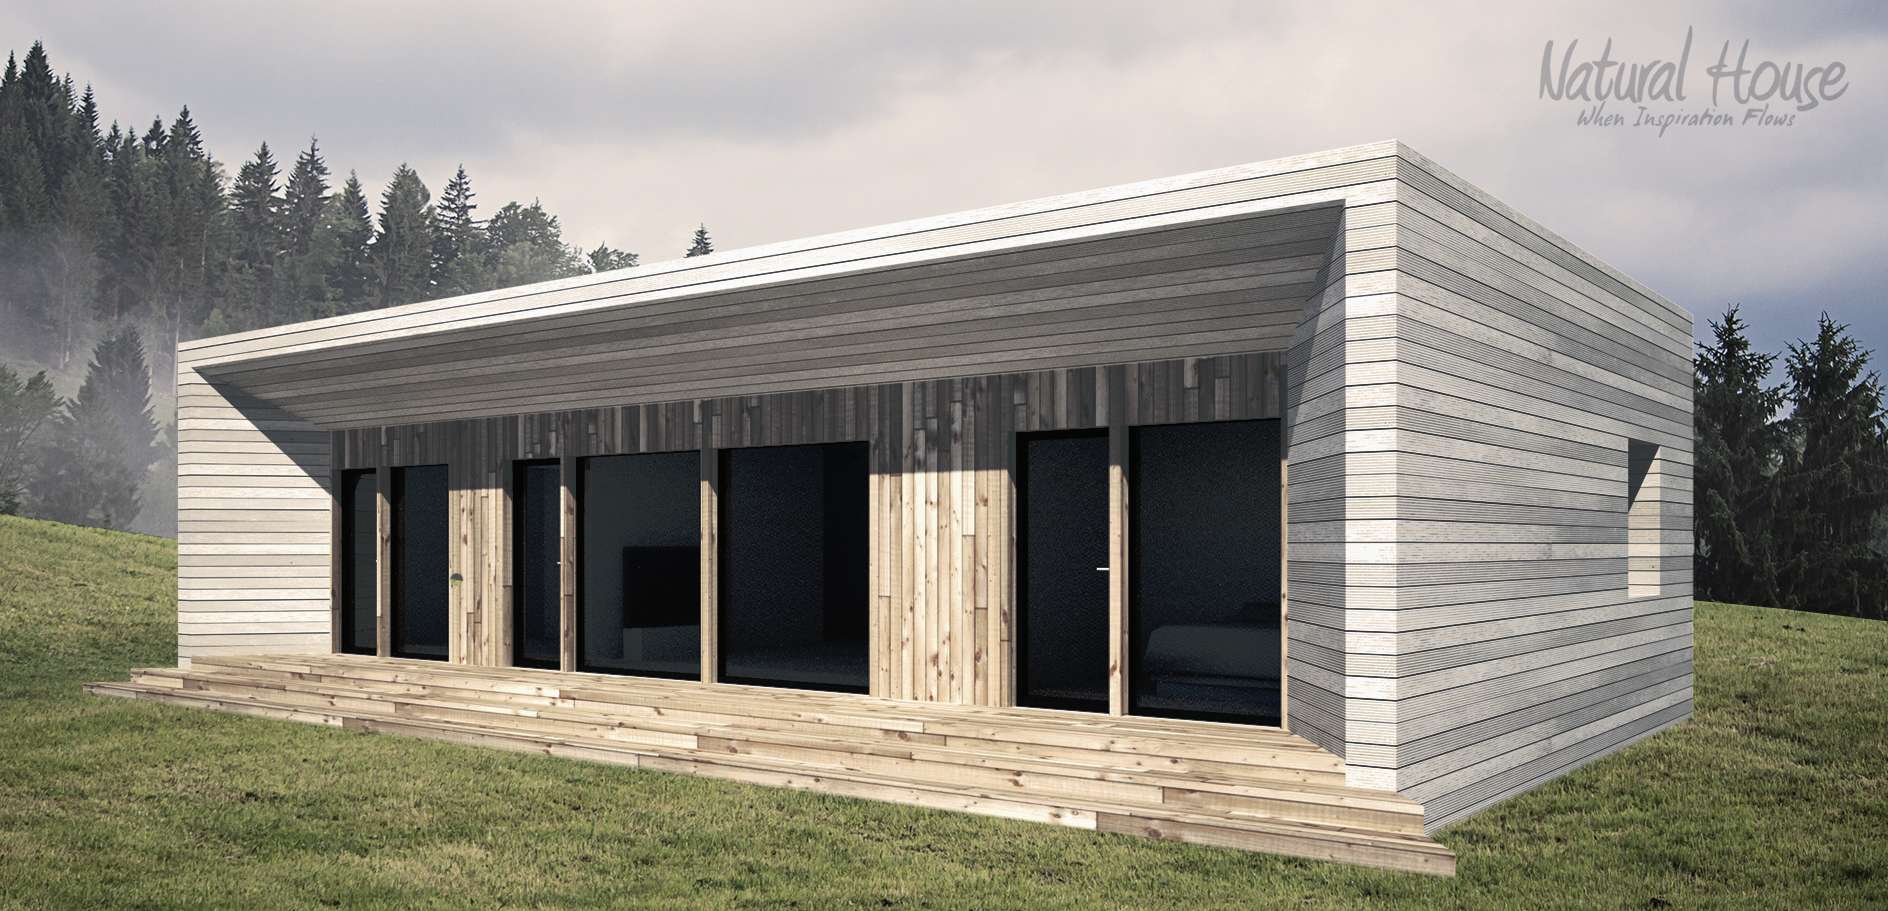 energy efficient - private house - naturalhouse